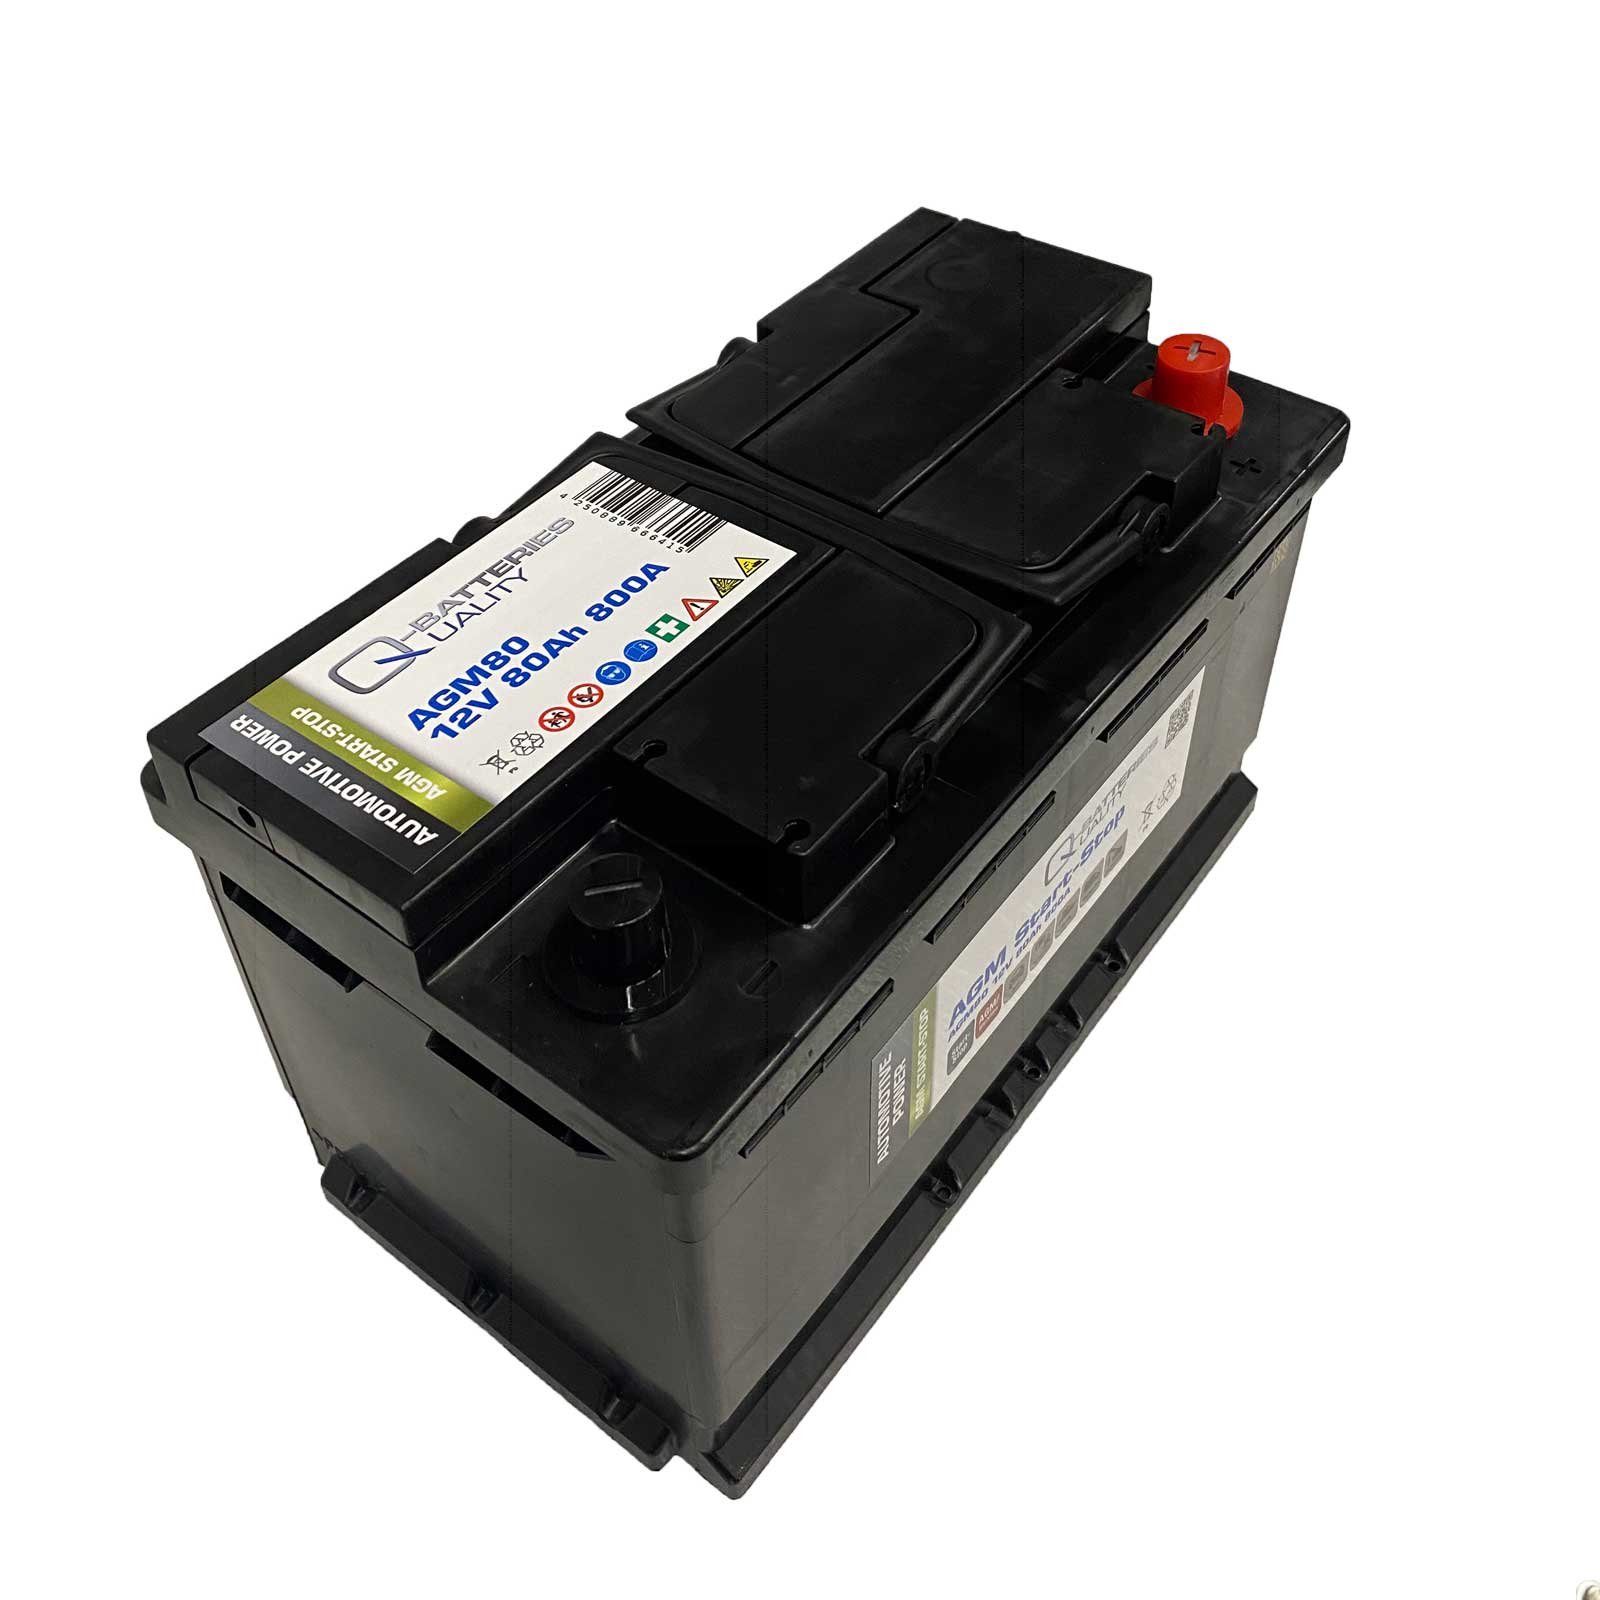 ORIGINAL BMW Autobatterie AGM Batterie Starterbatterie 12V 92Ah 850A  61216806755